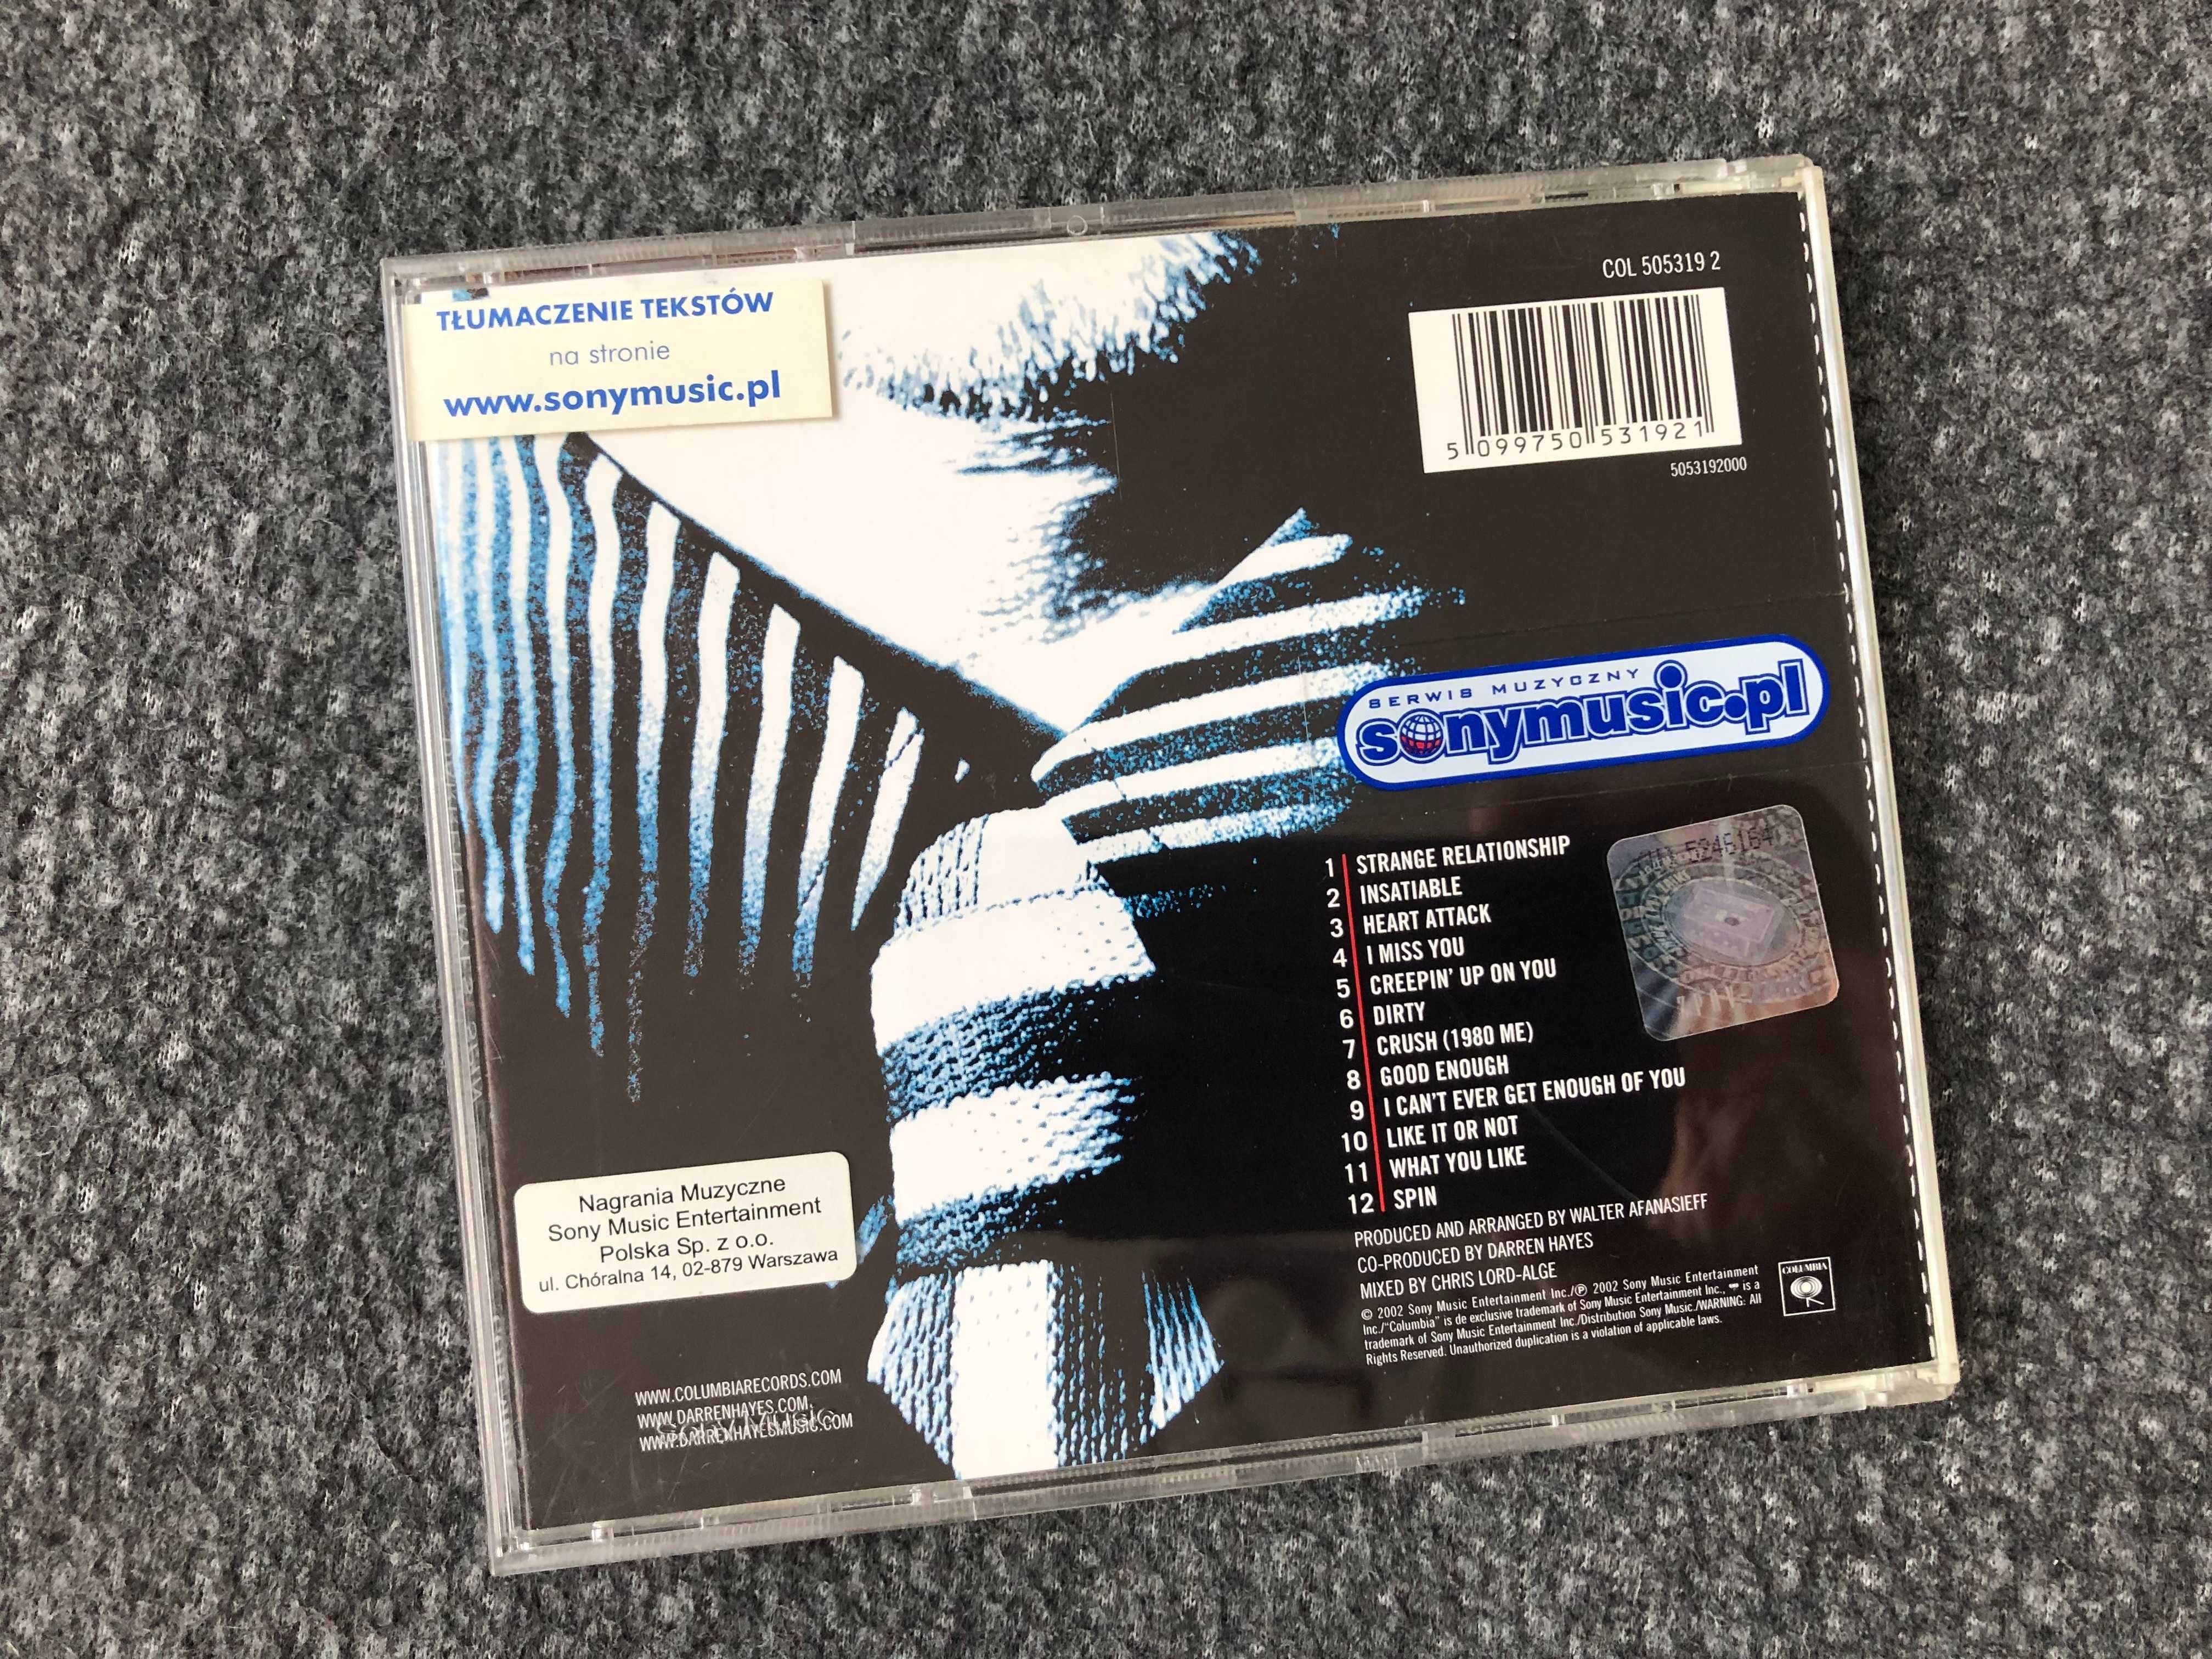 Darren Hayes "Spin" CD